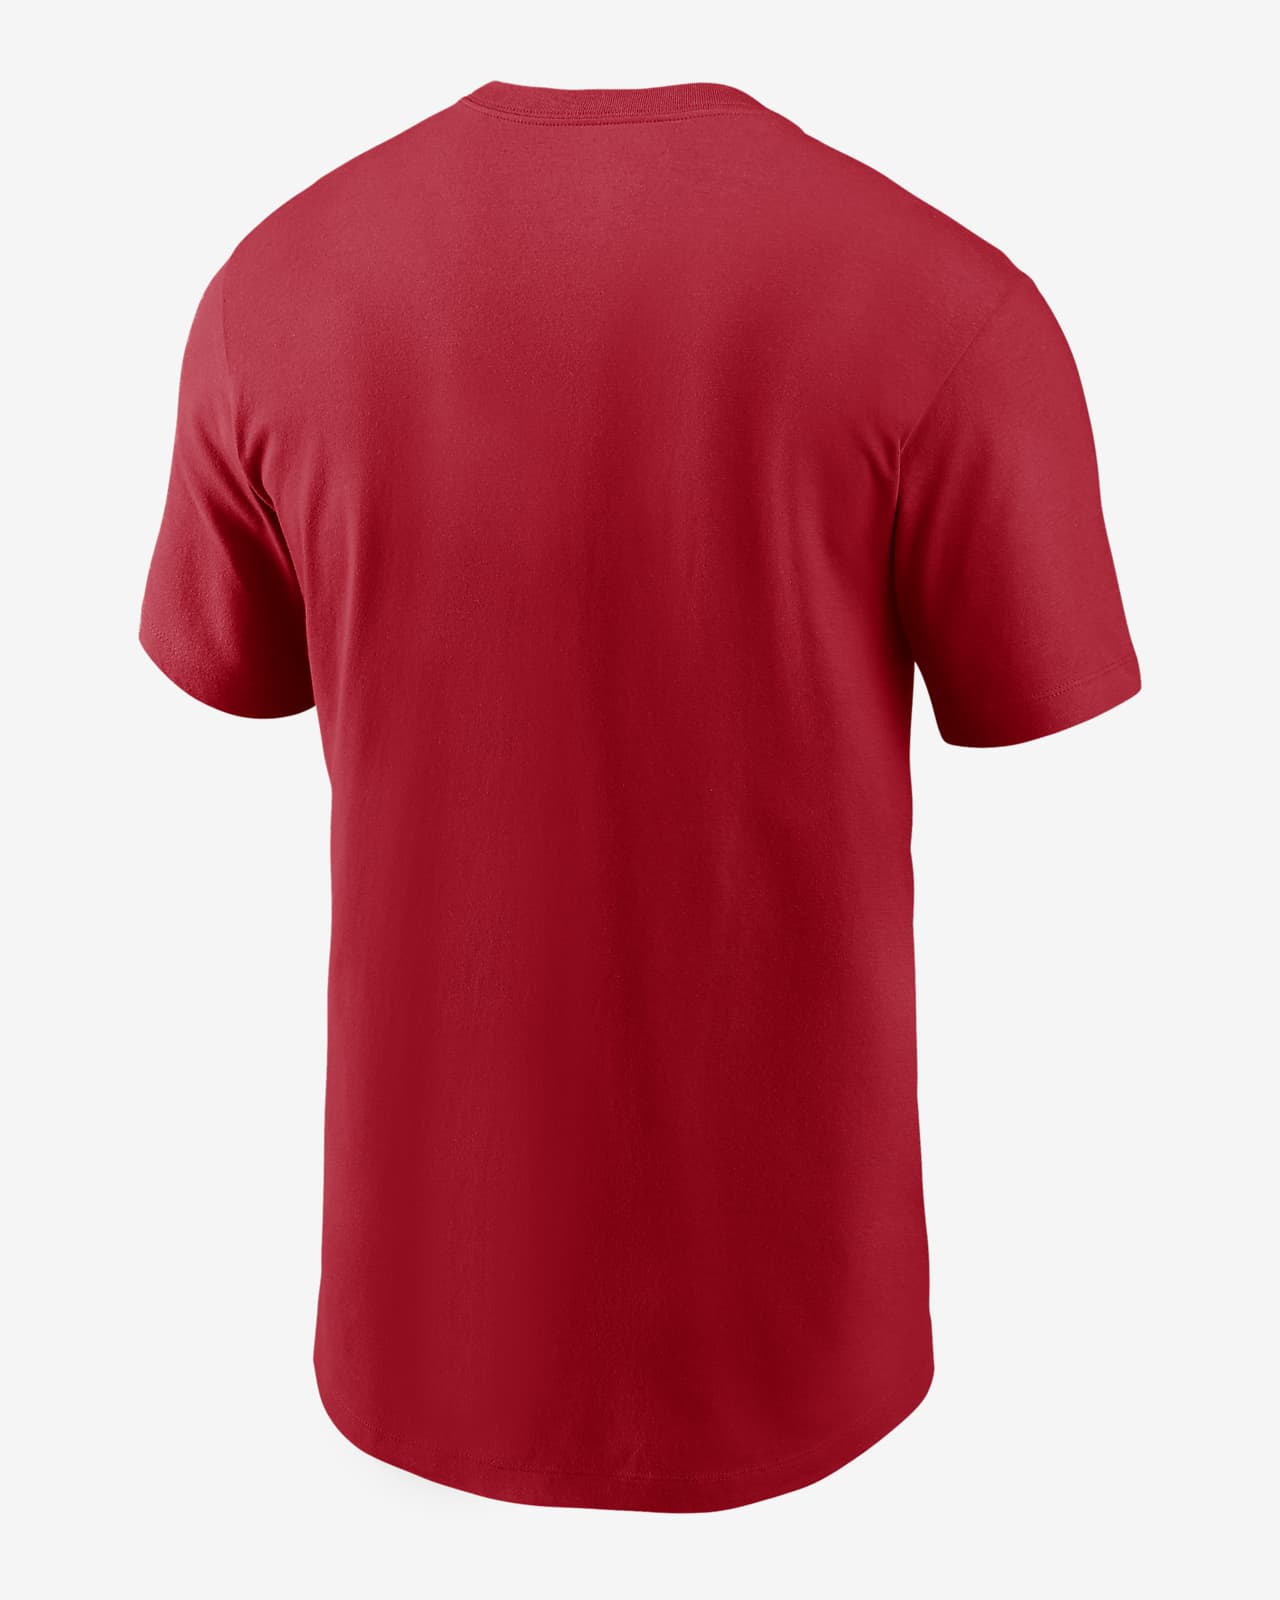 Lady Bird T-Shirt High Quality Microfiber Tee Men's Women's All Sizes